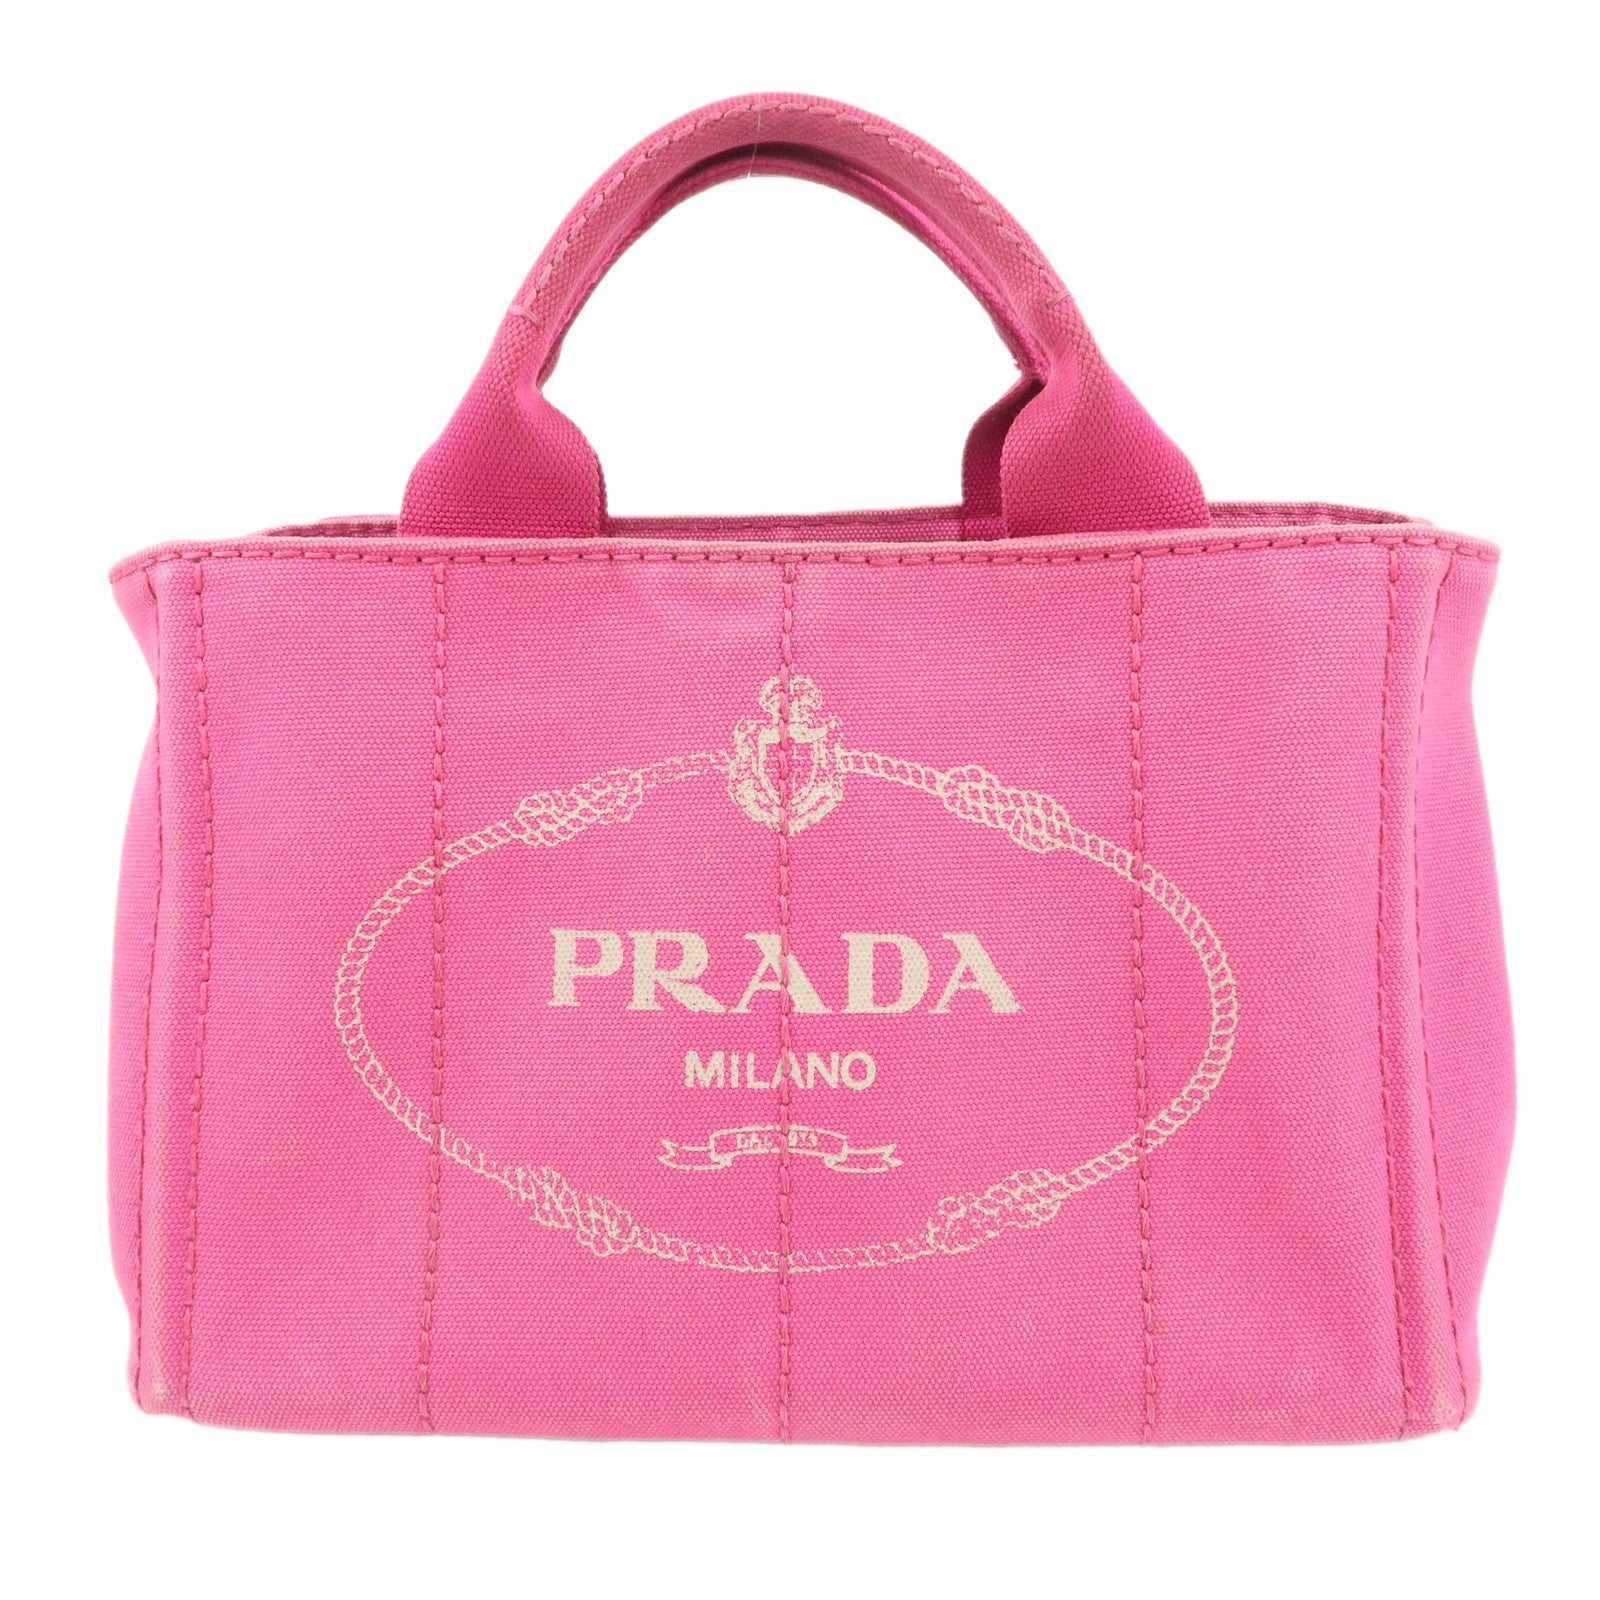 Prada Saffiano leather mini bag for Women - Blue in UAE | Level Shoes